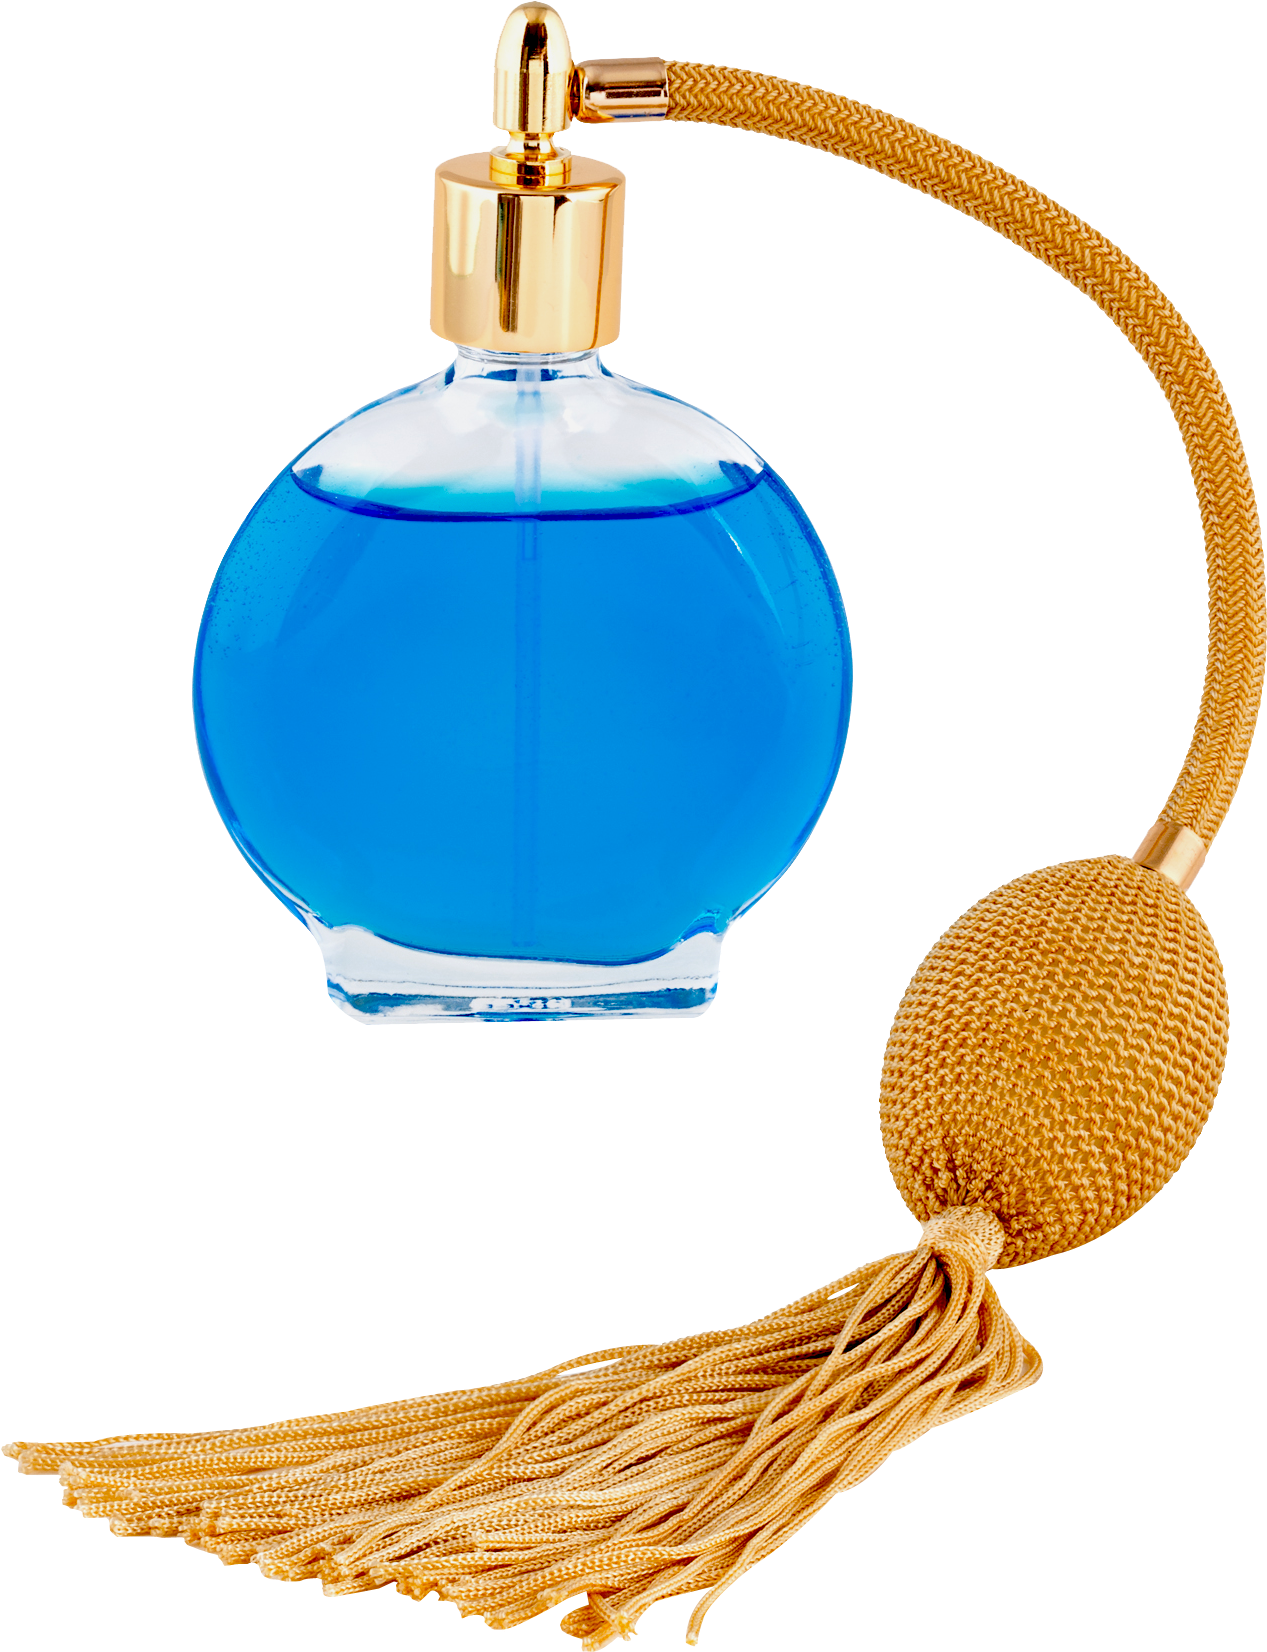 A Blue Liquid In A Bottle